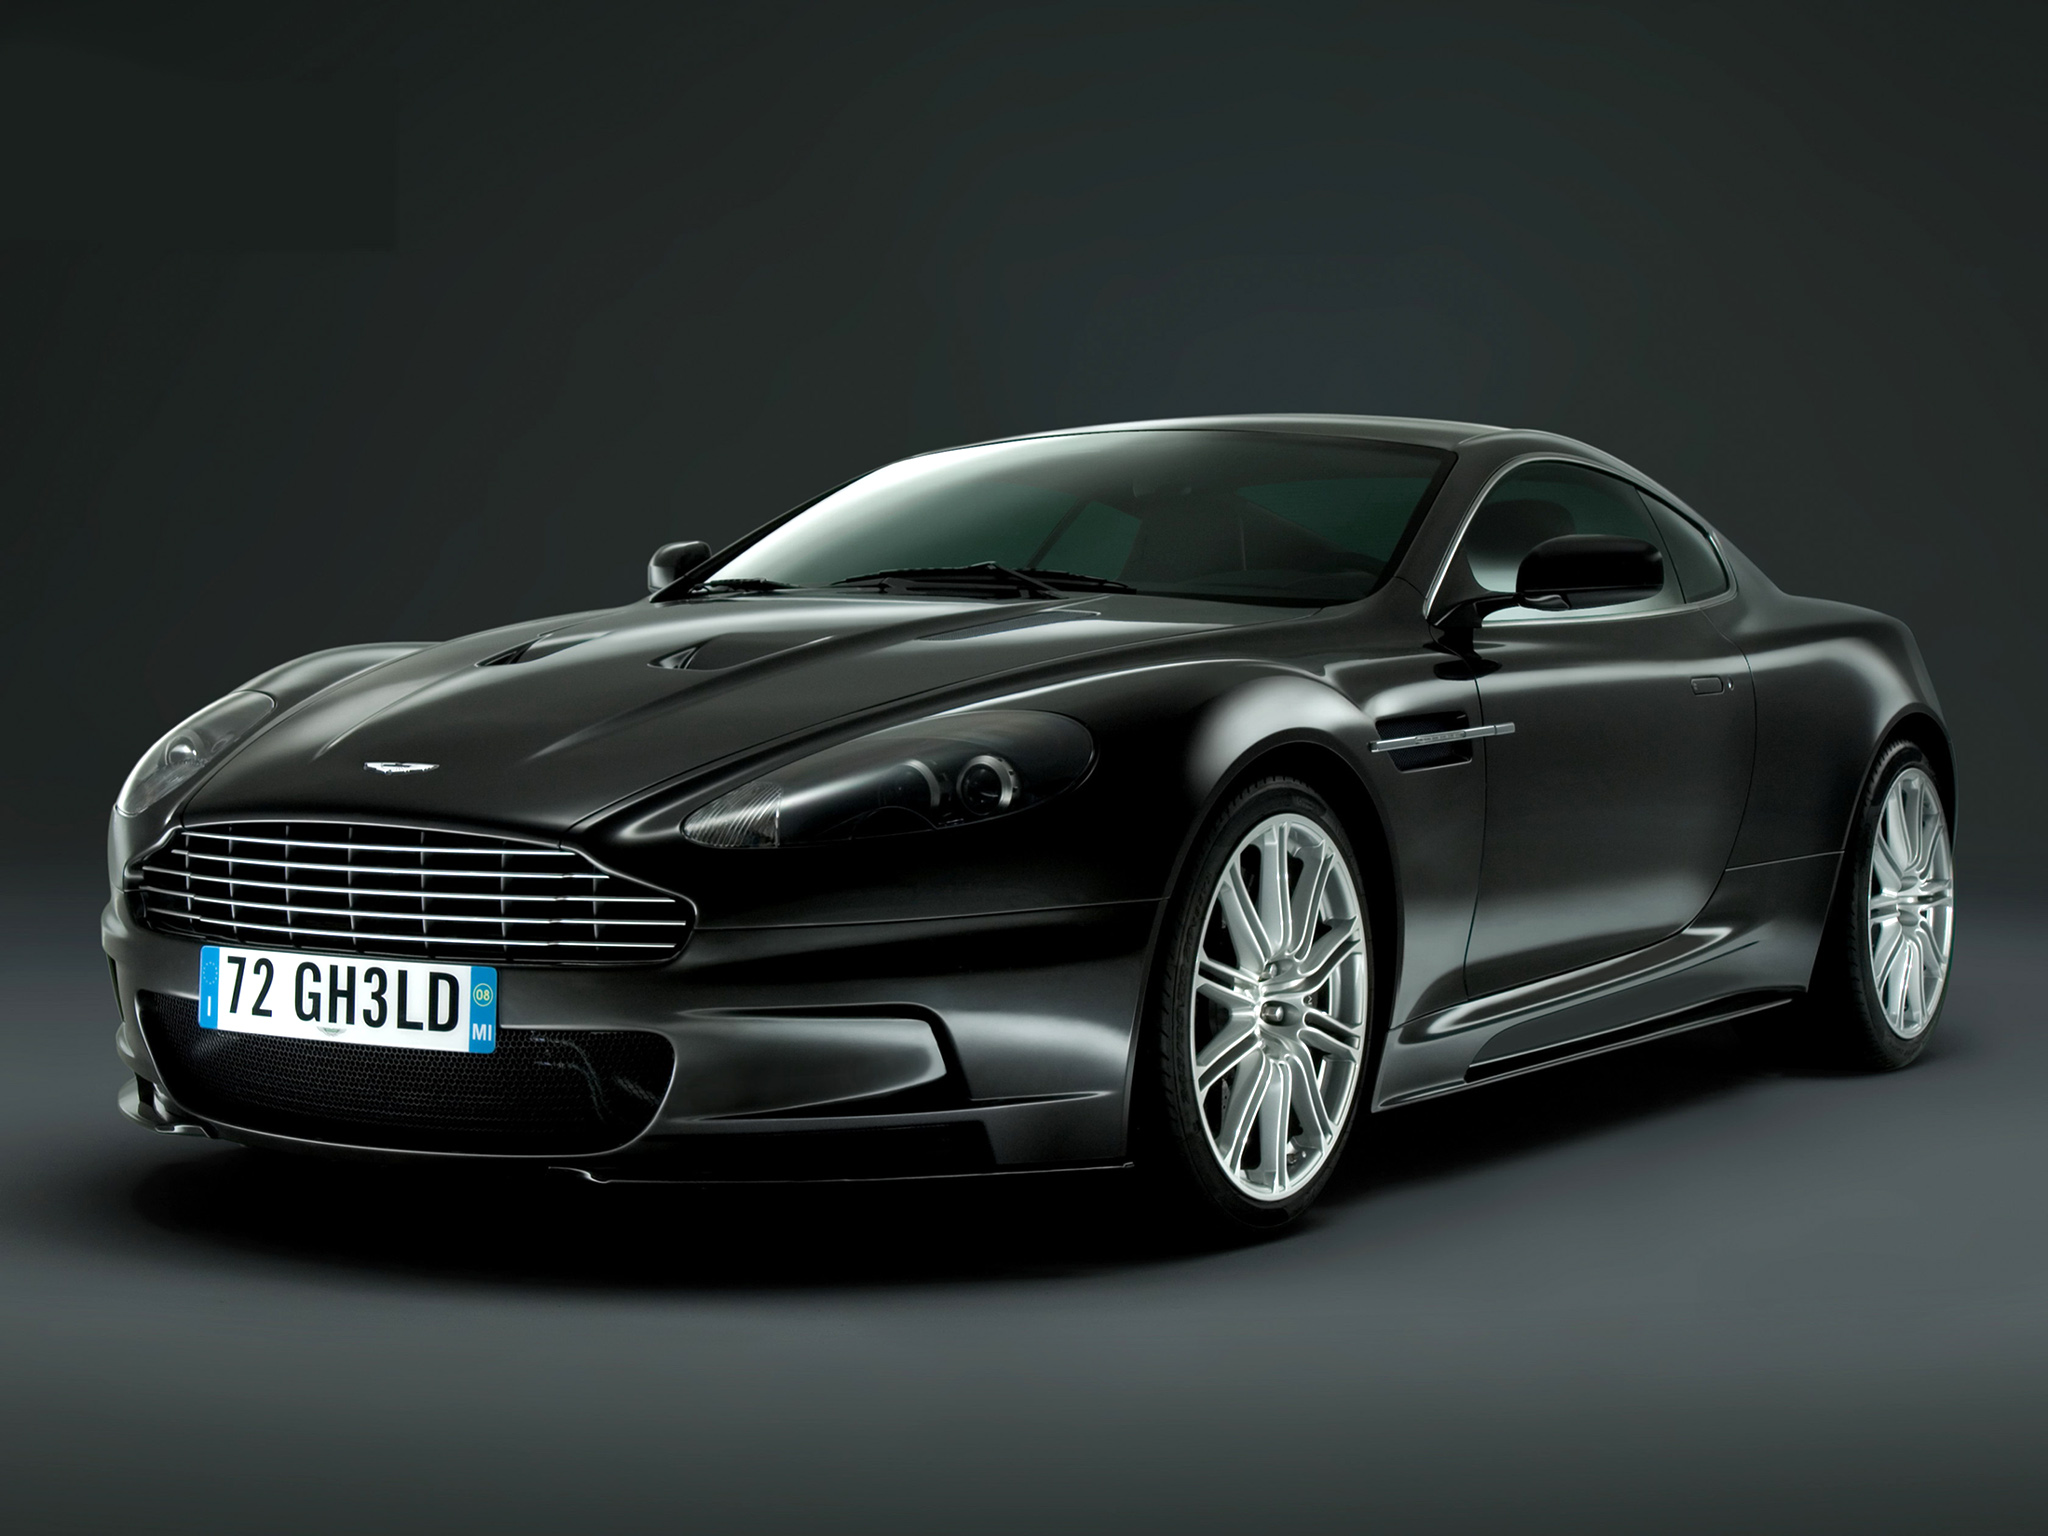 Aston Martin Dbs James Bond Quantum Of Solace Wallpaper Car